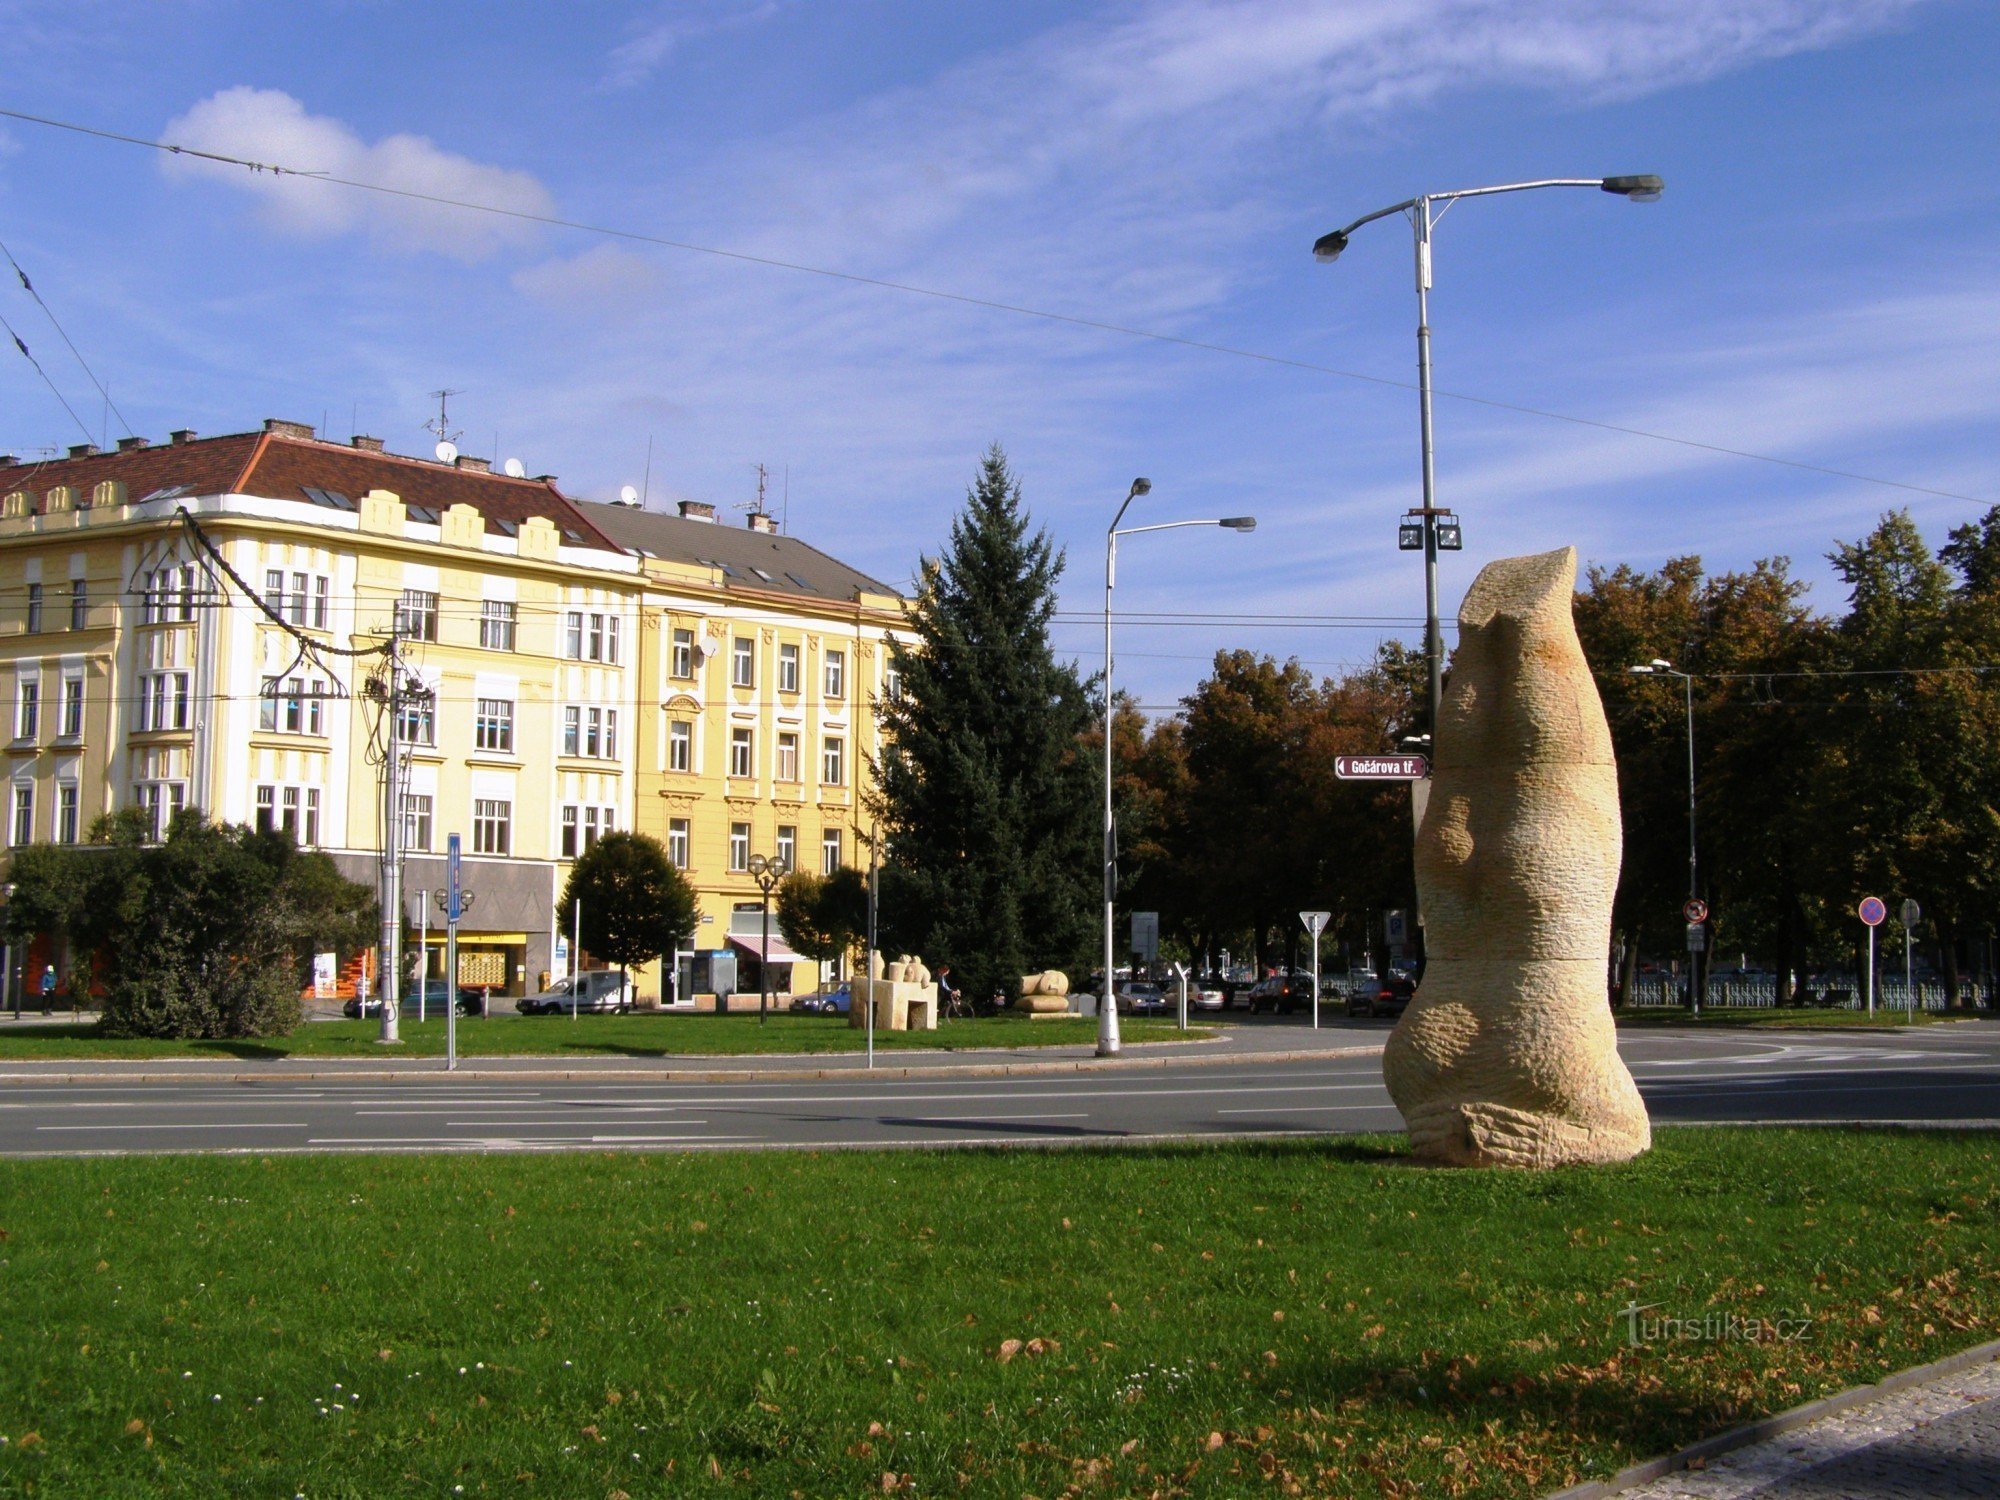 Hradec Králové - Quảng trường Tự do